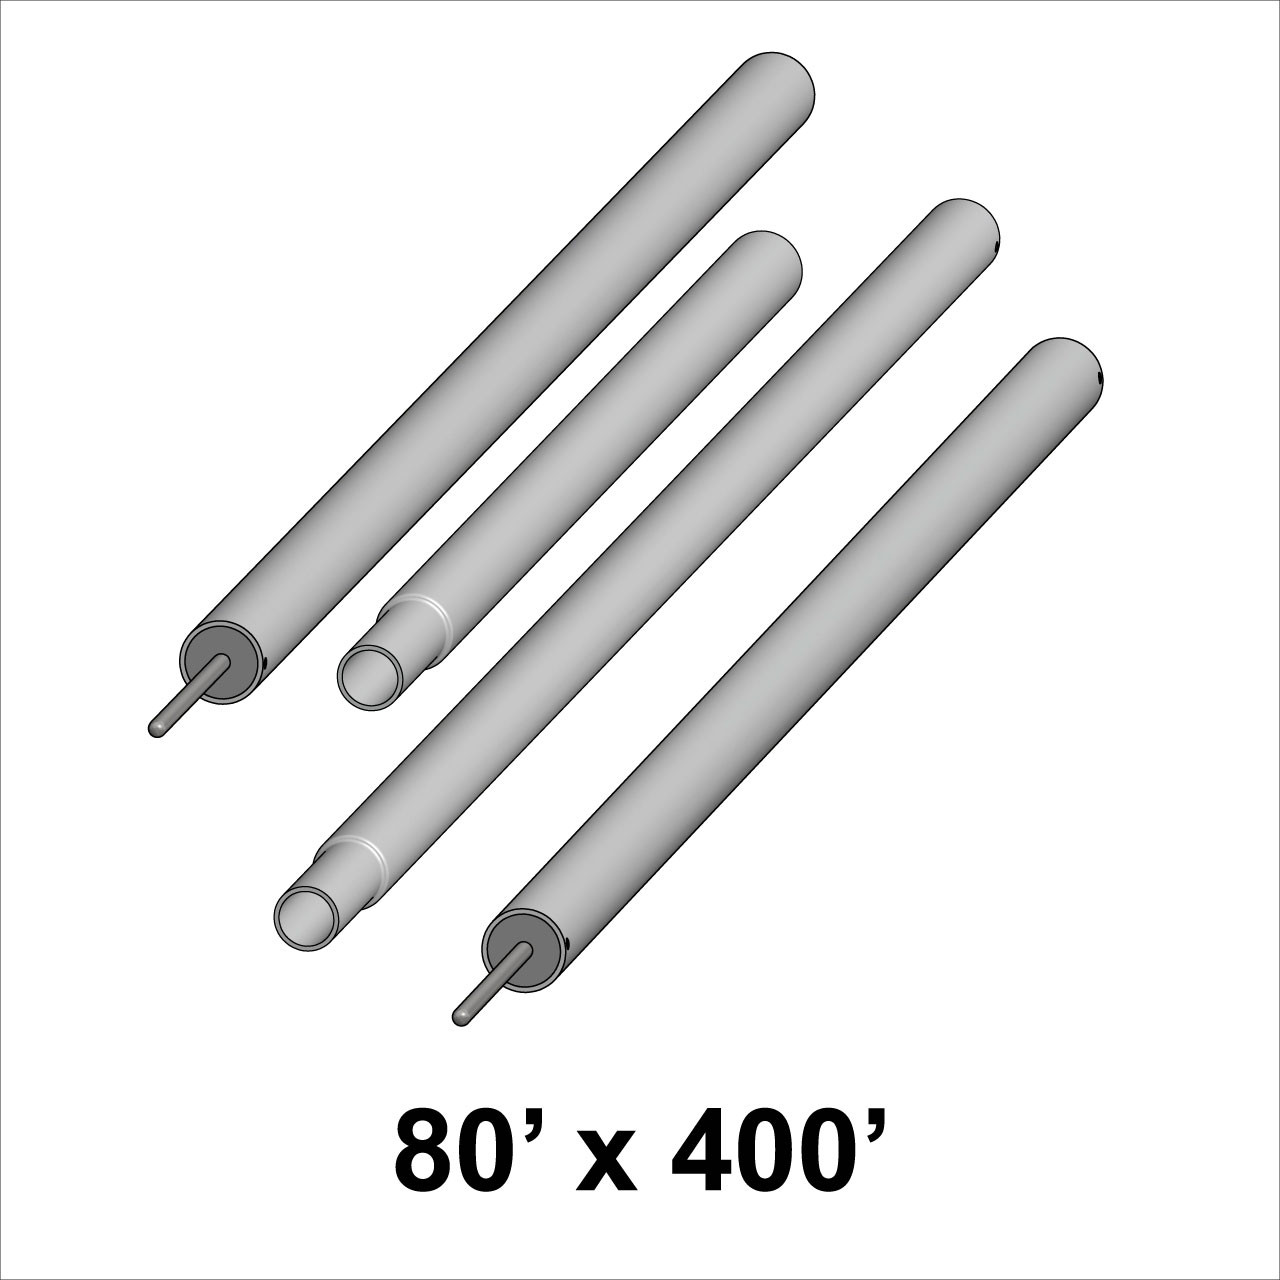 80' x 400' Classic Series Pole Kit